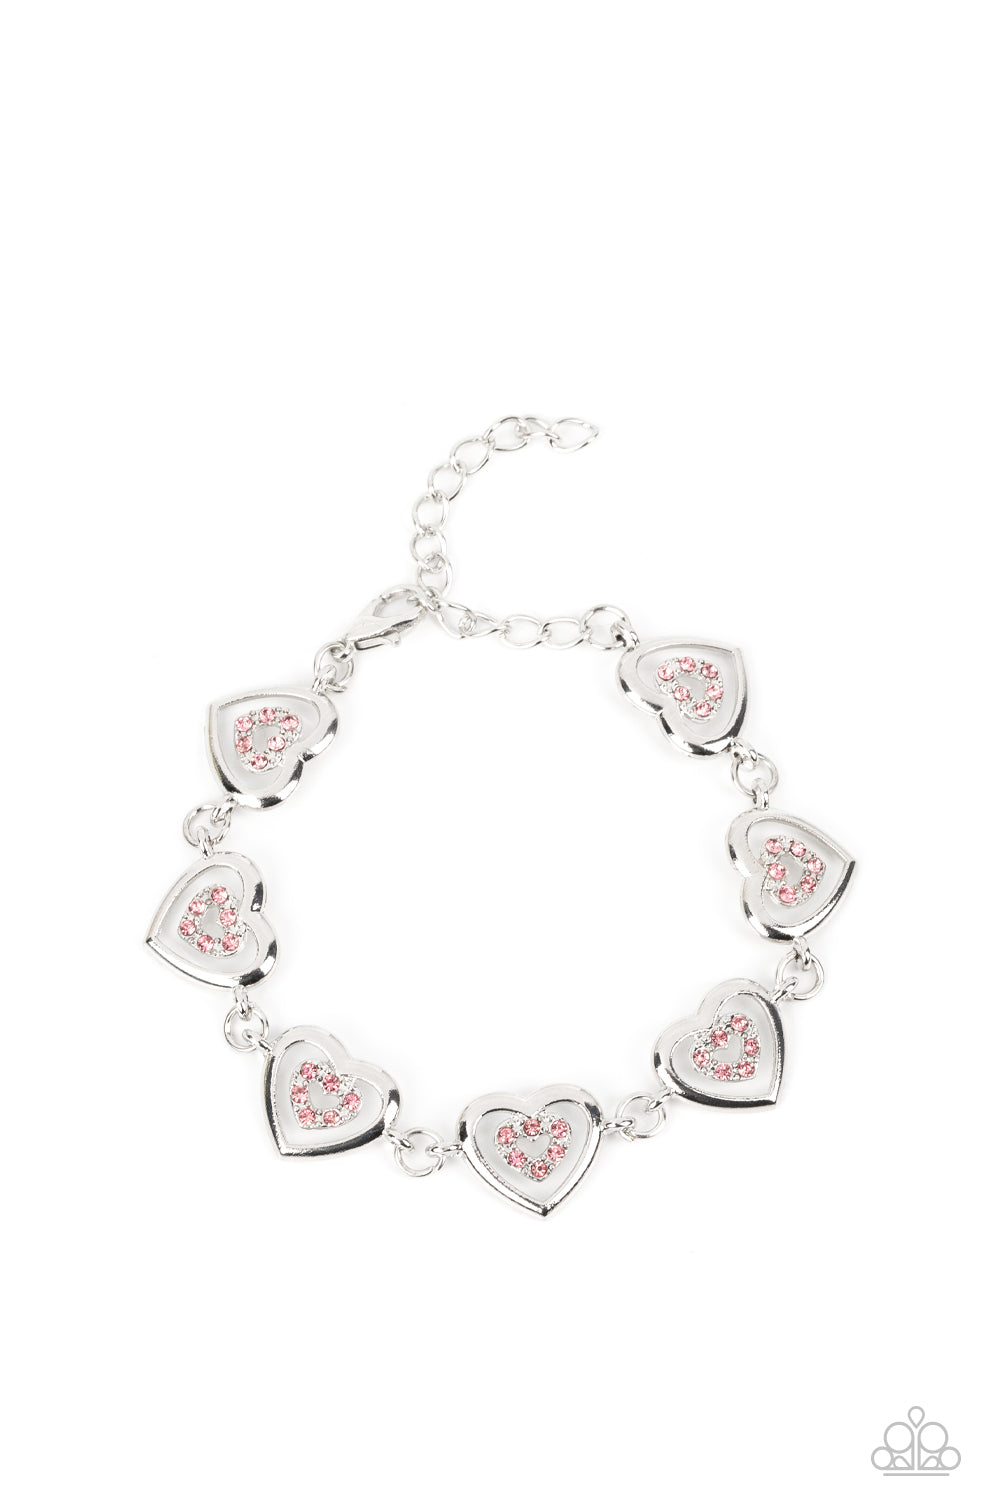 Catching Feelings - Pink Heart Bracelet Preorder - Princess Glam Shop